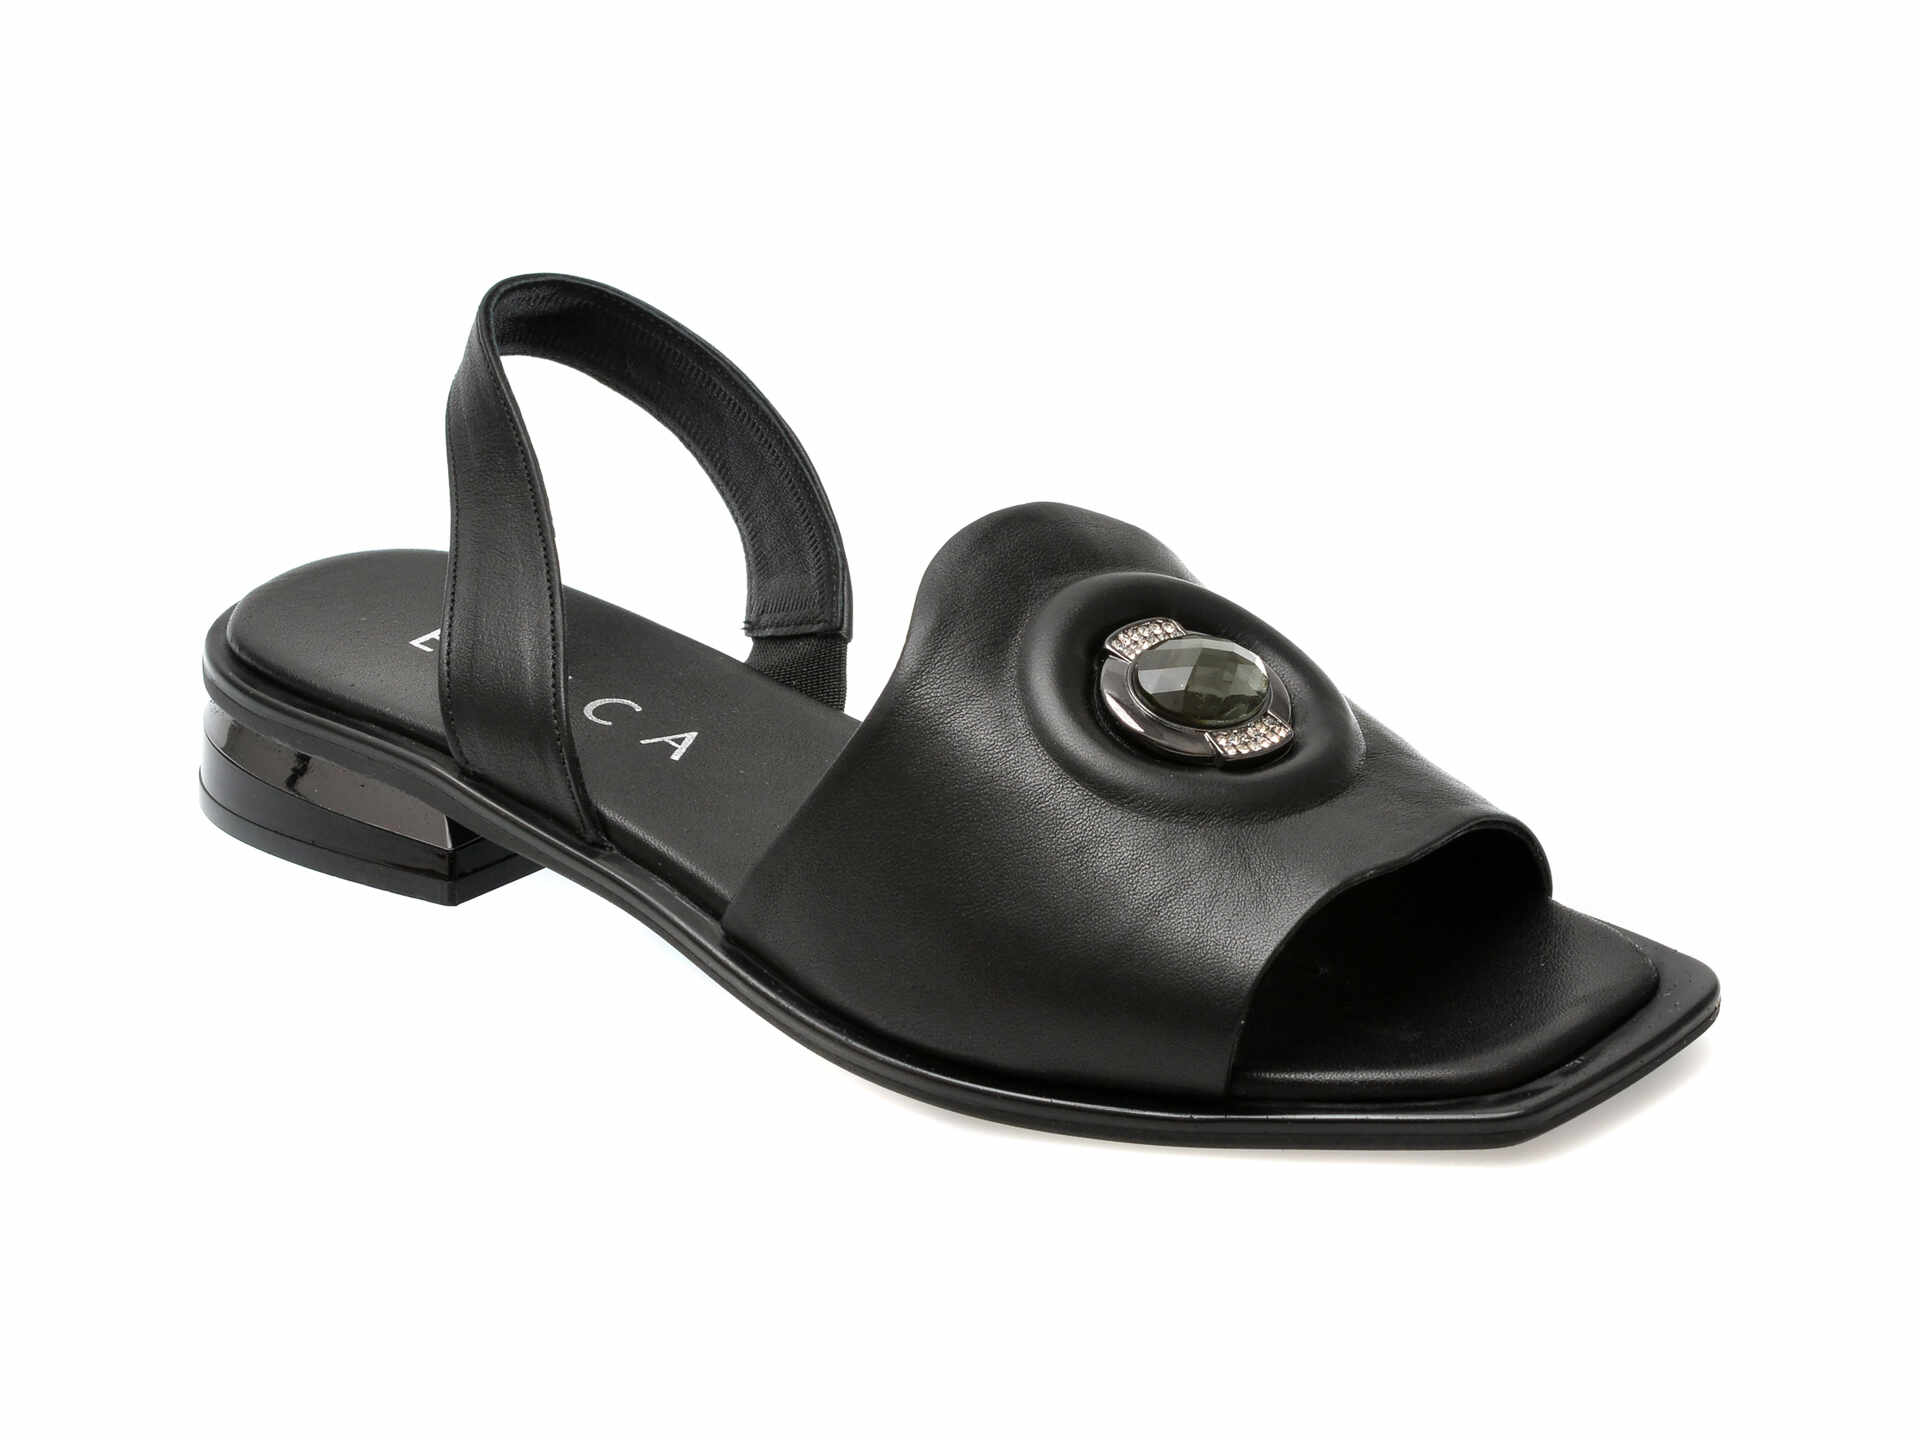 Sandale casual EPICA negre, 37217, din piele naturala